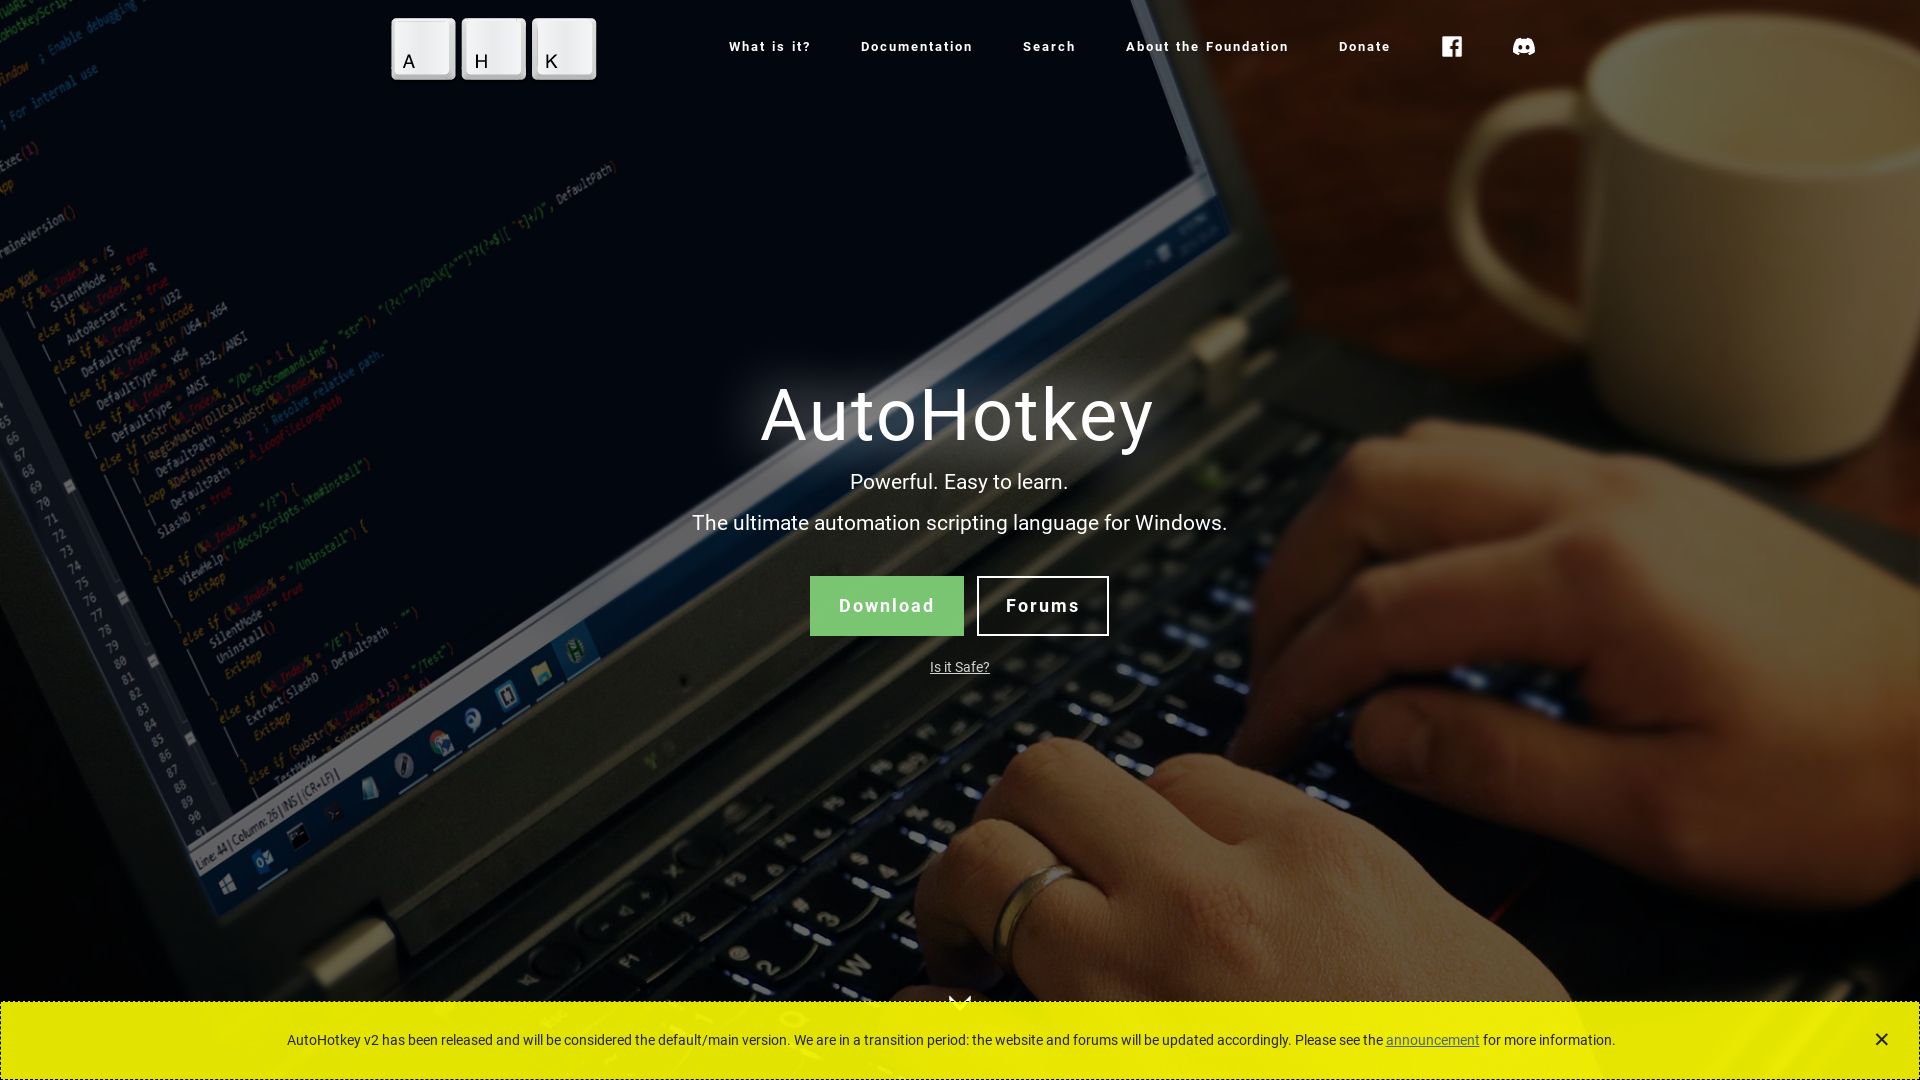 Website status autohotkey.com is   ONLINE